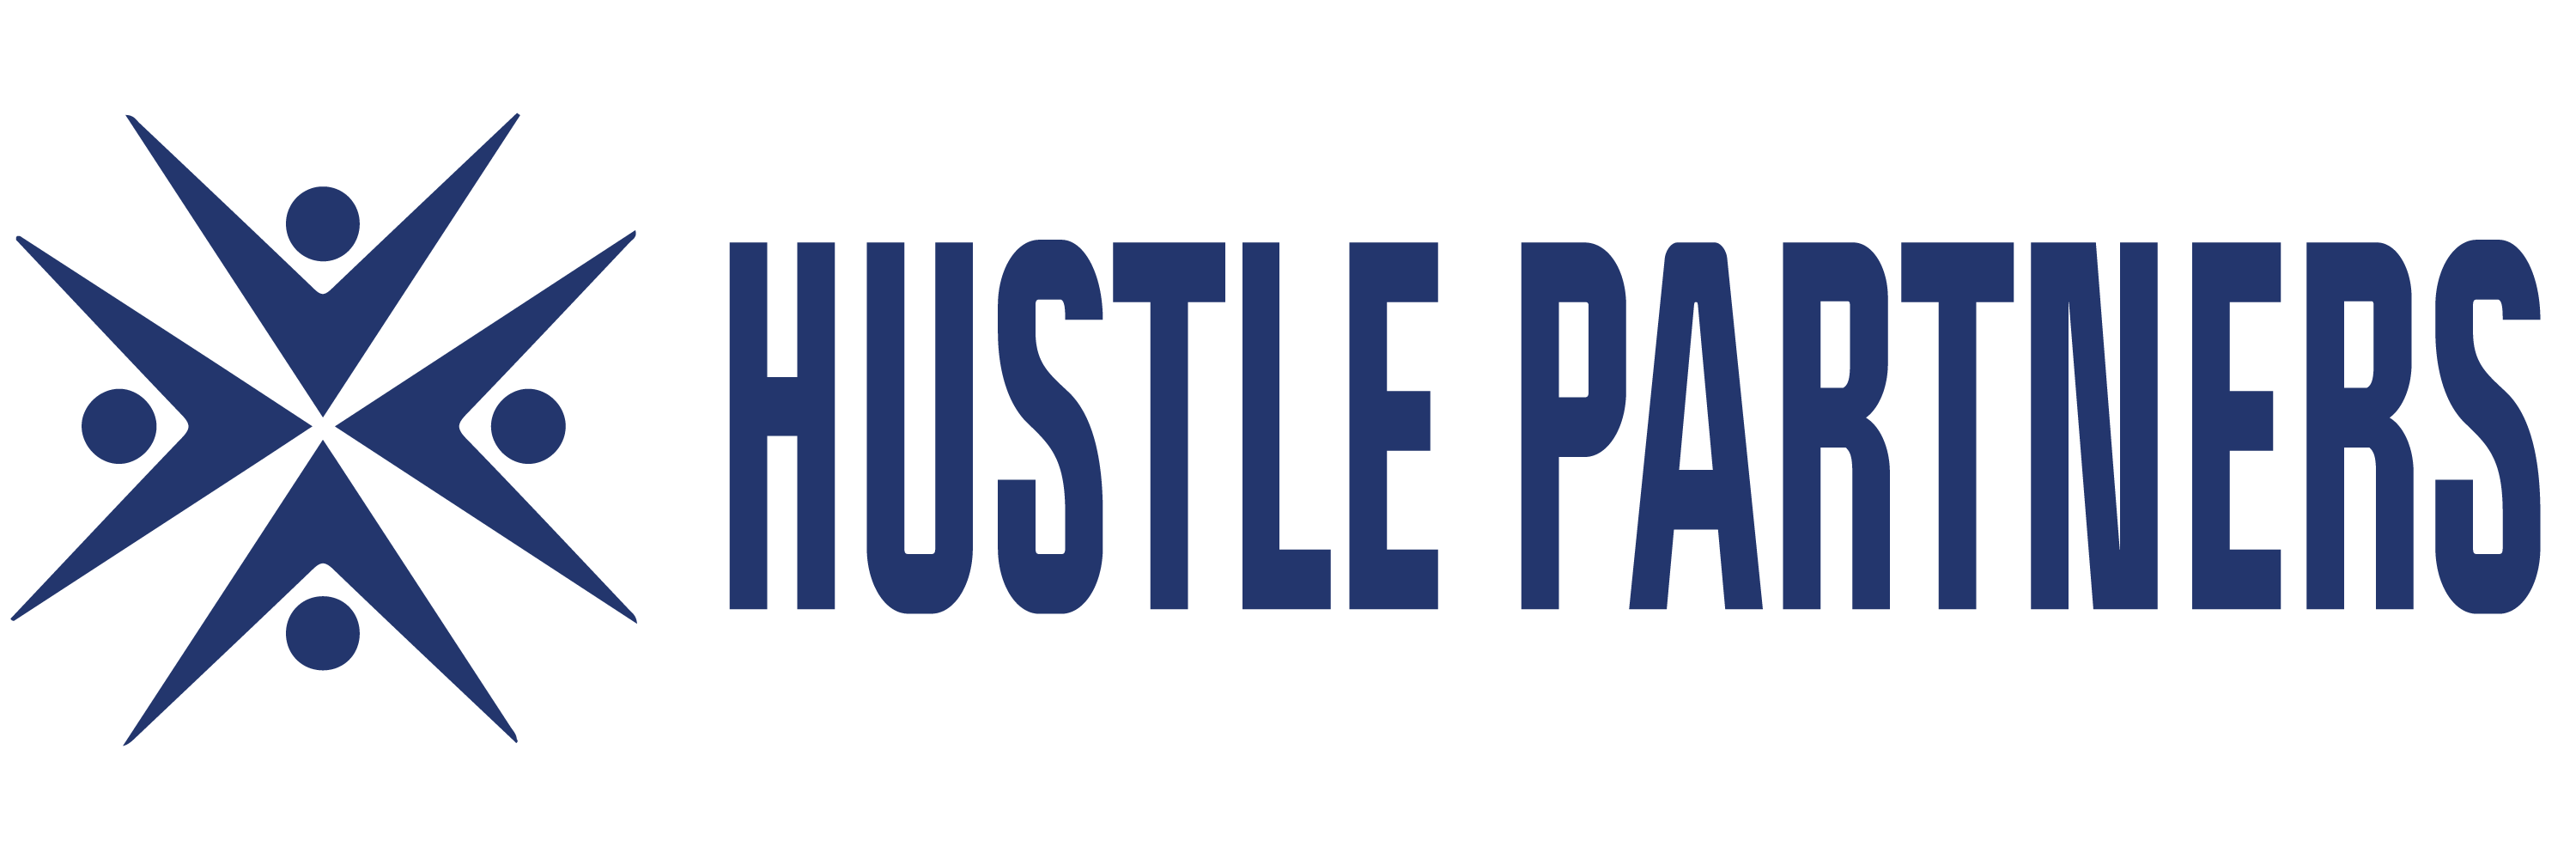 Hustle Partners Logo